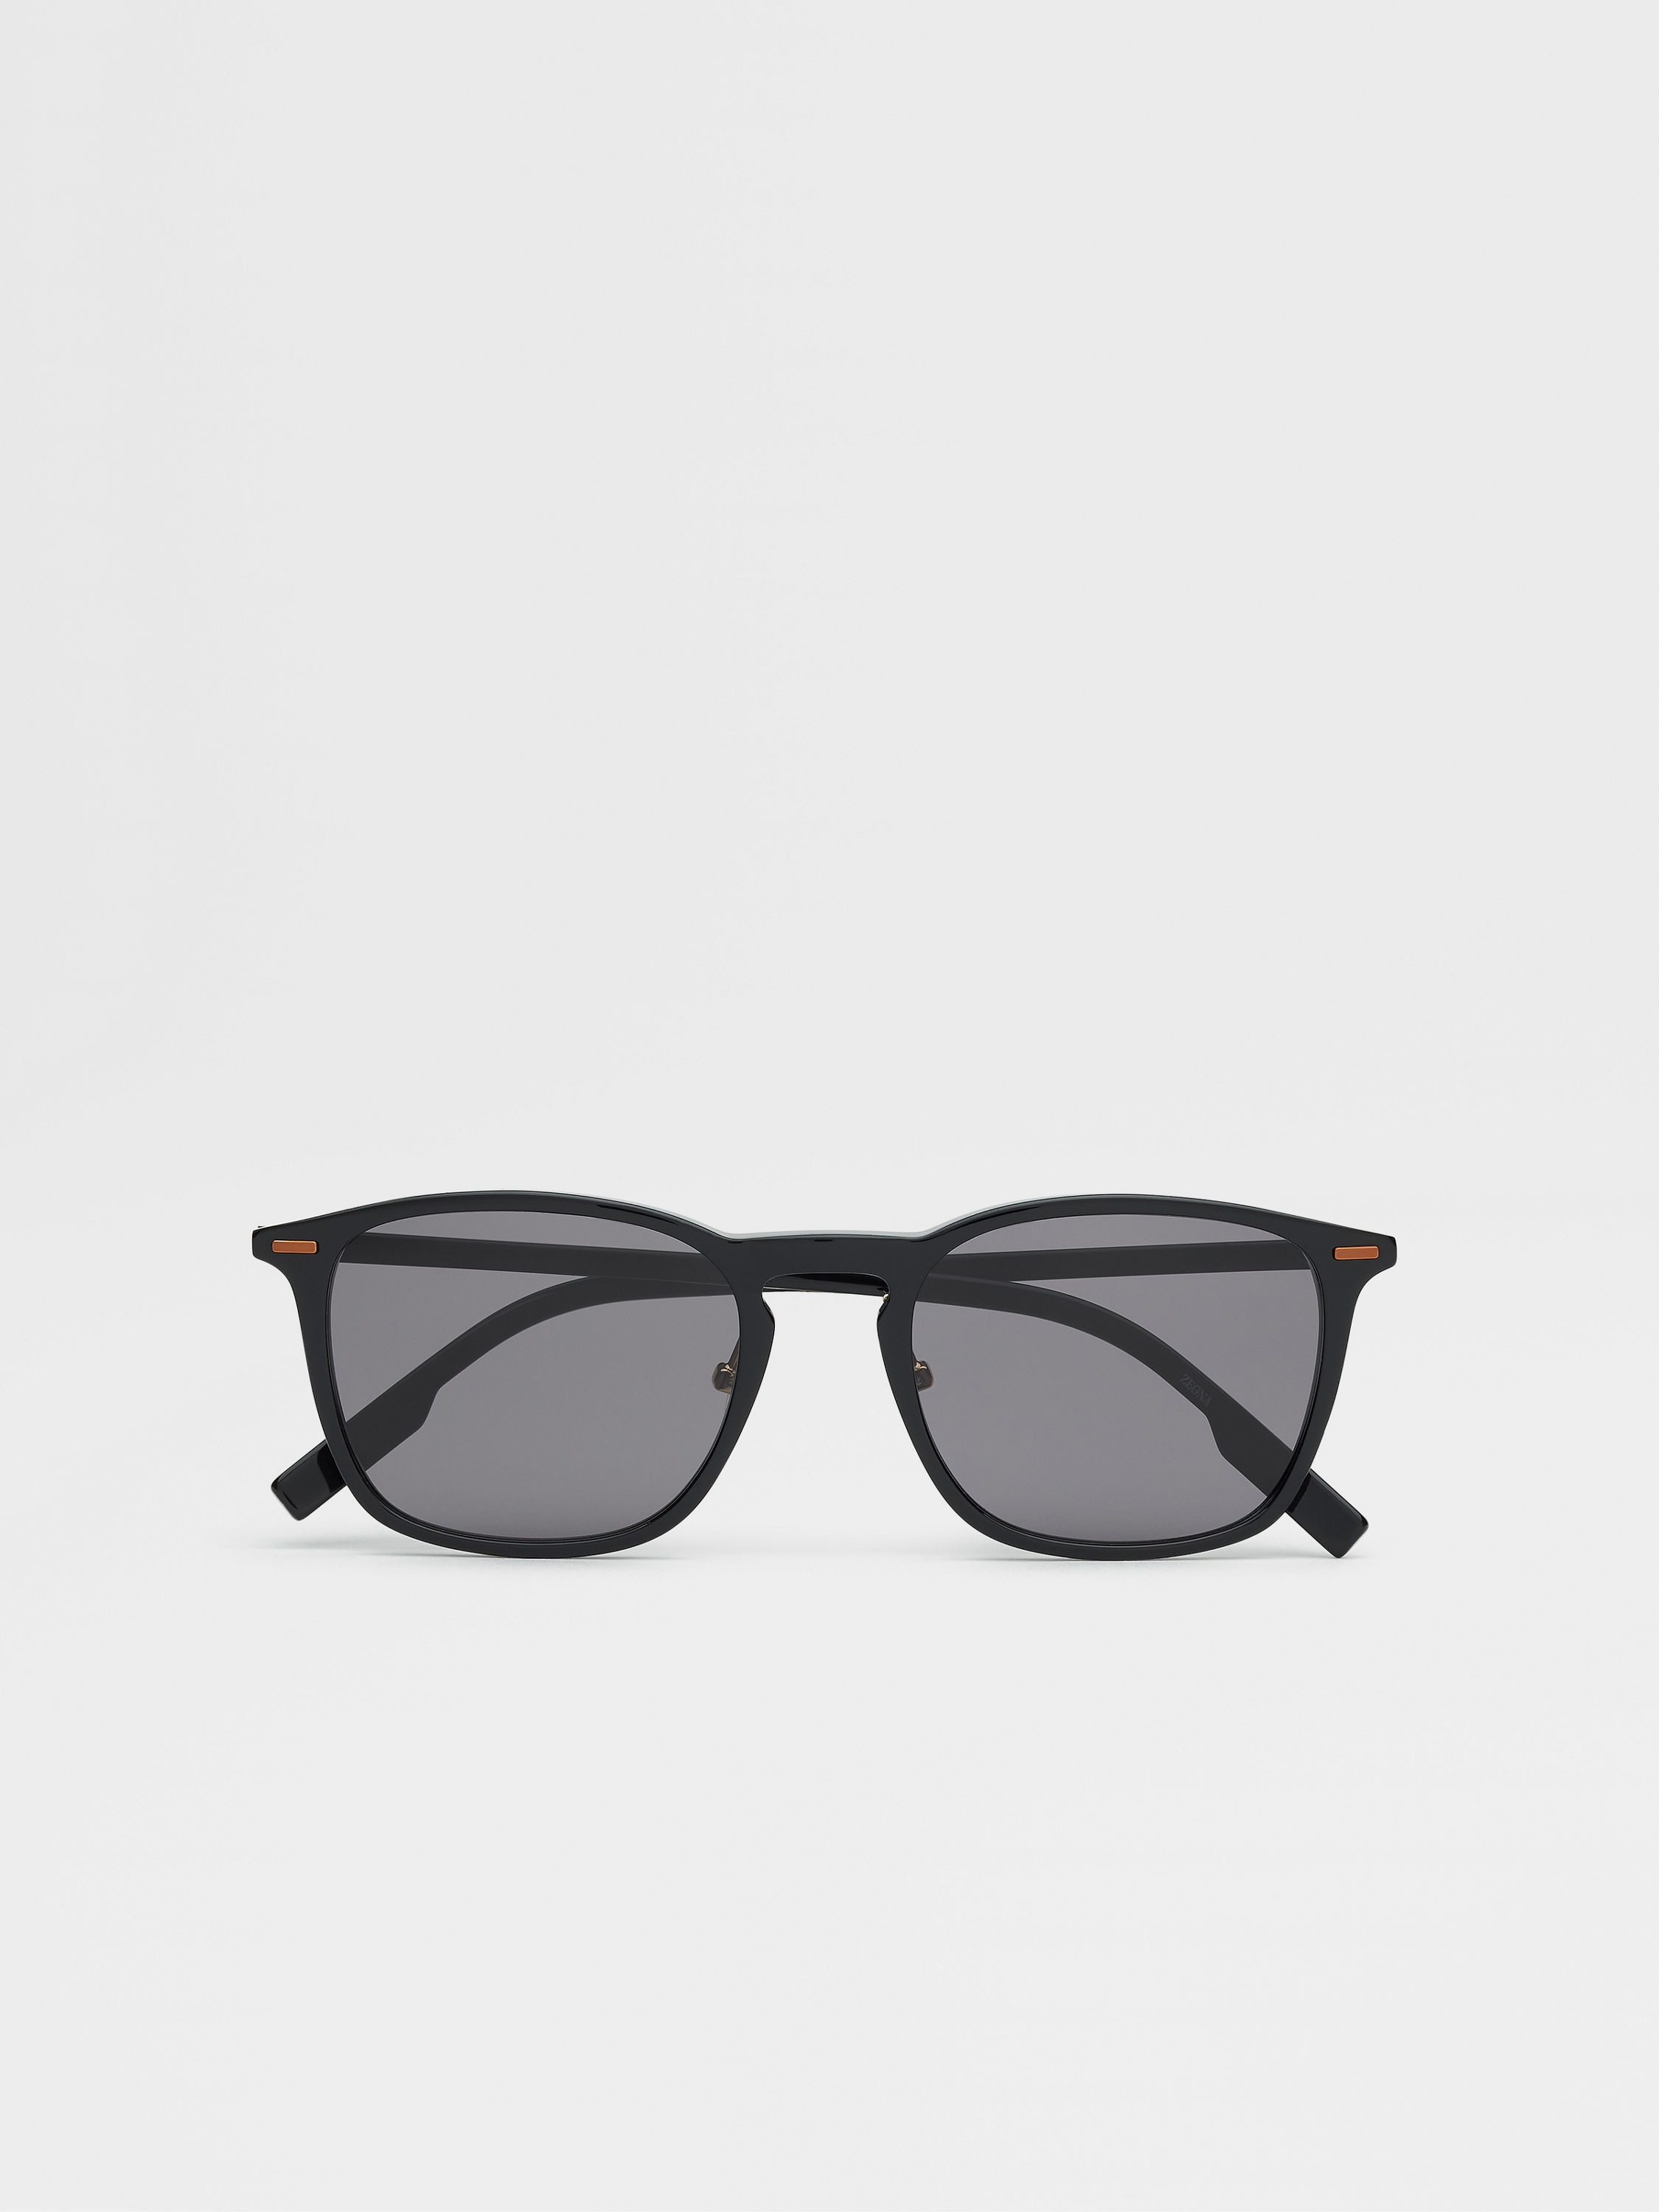 Black Acetate Leggerissimo Sunglasses